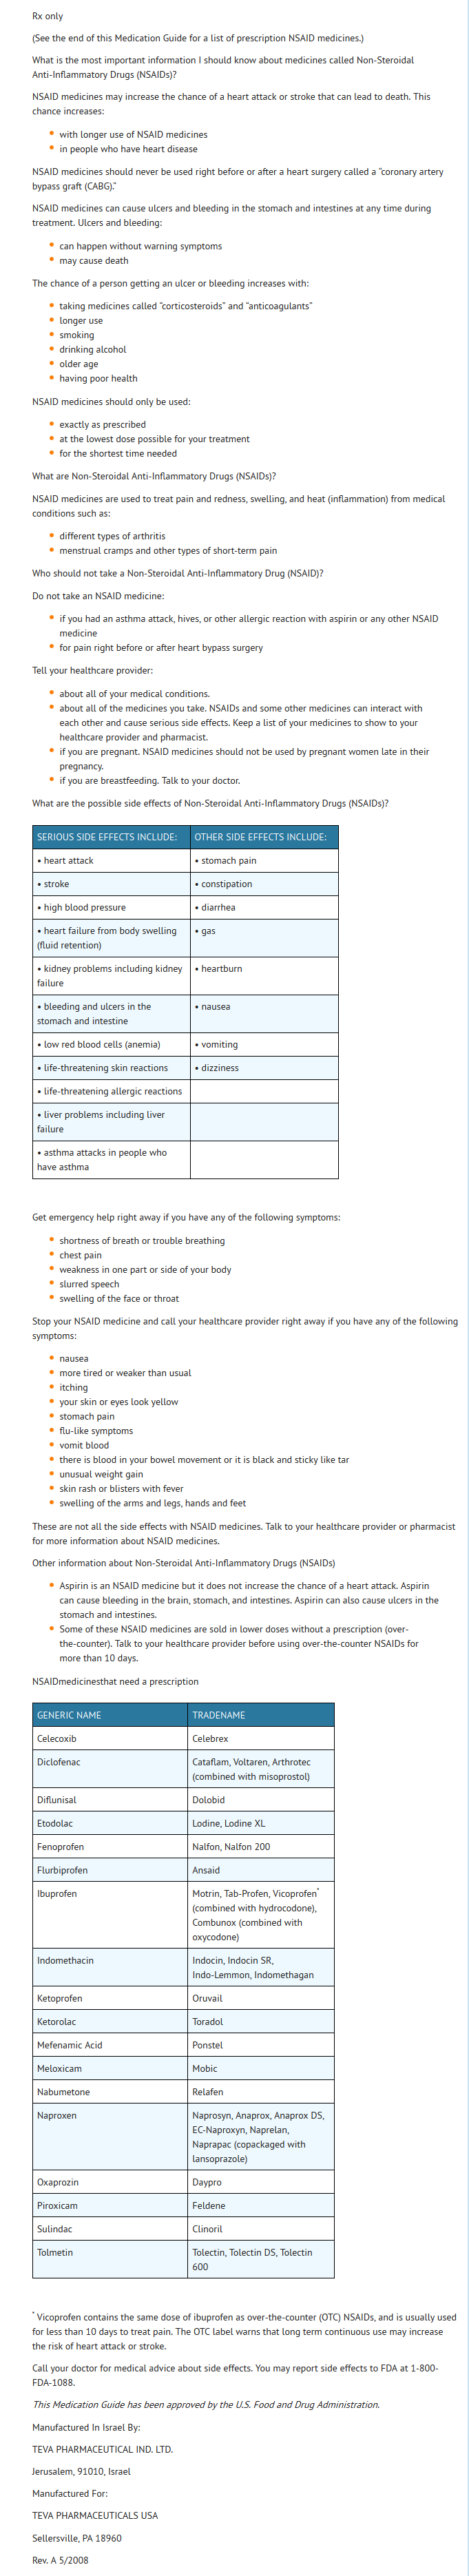 File:Etodolac medication guide.png